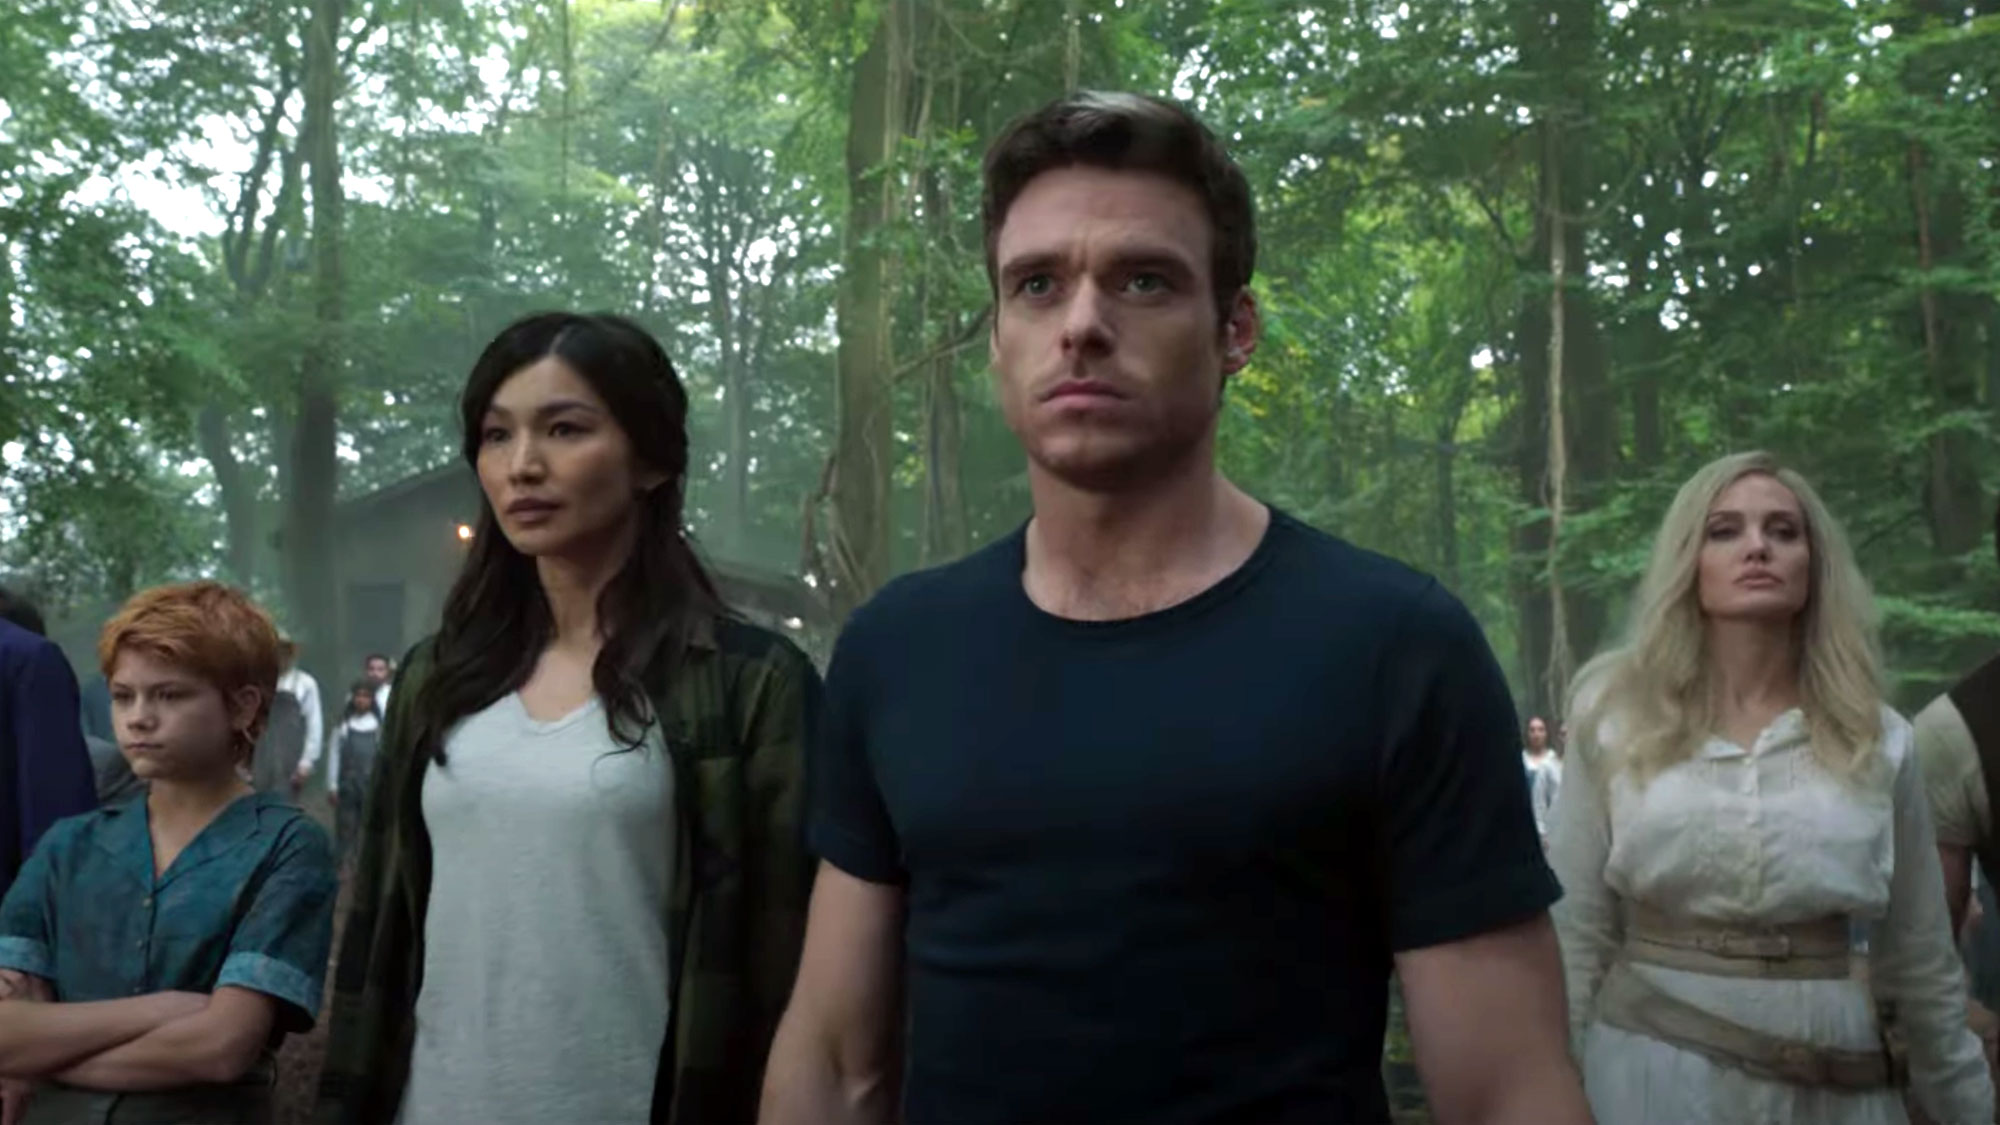 Marvel divulga primeiro trailer de Os Eternos. Confira!